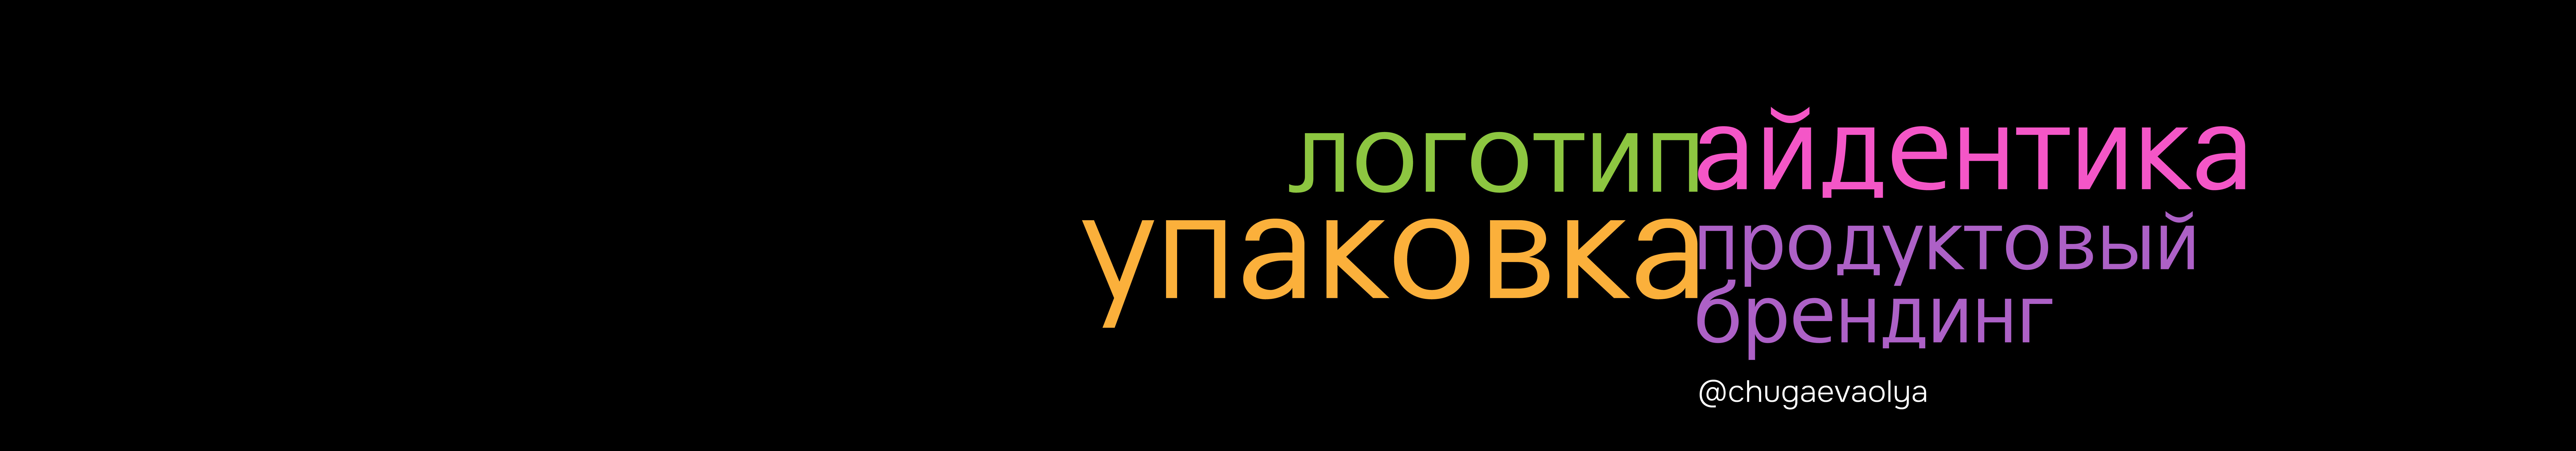 Olya Chugaeva's profile banner